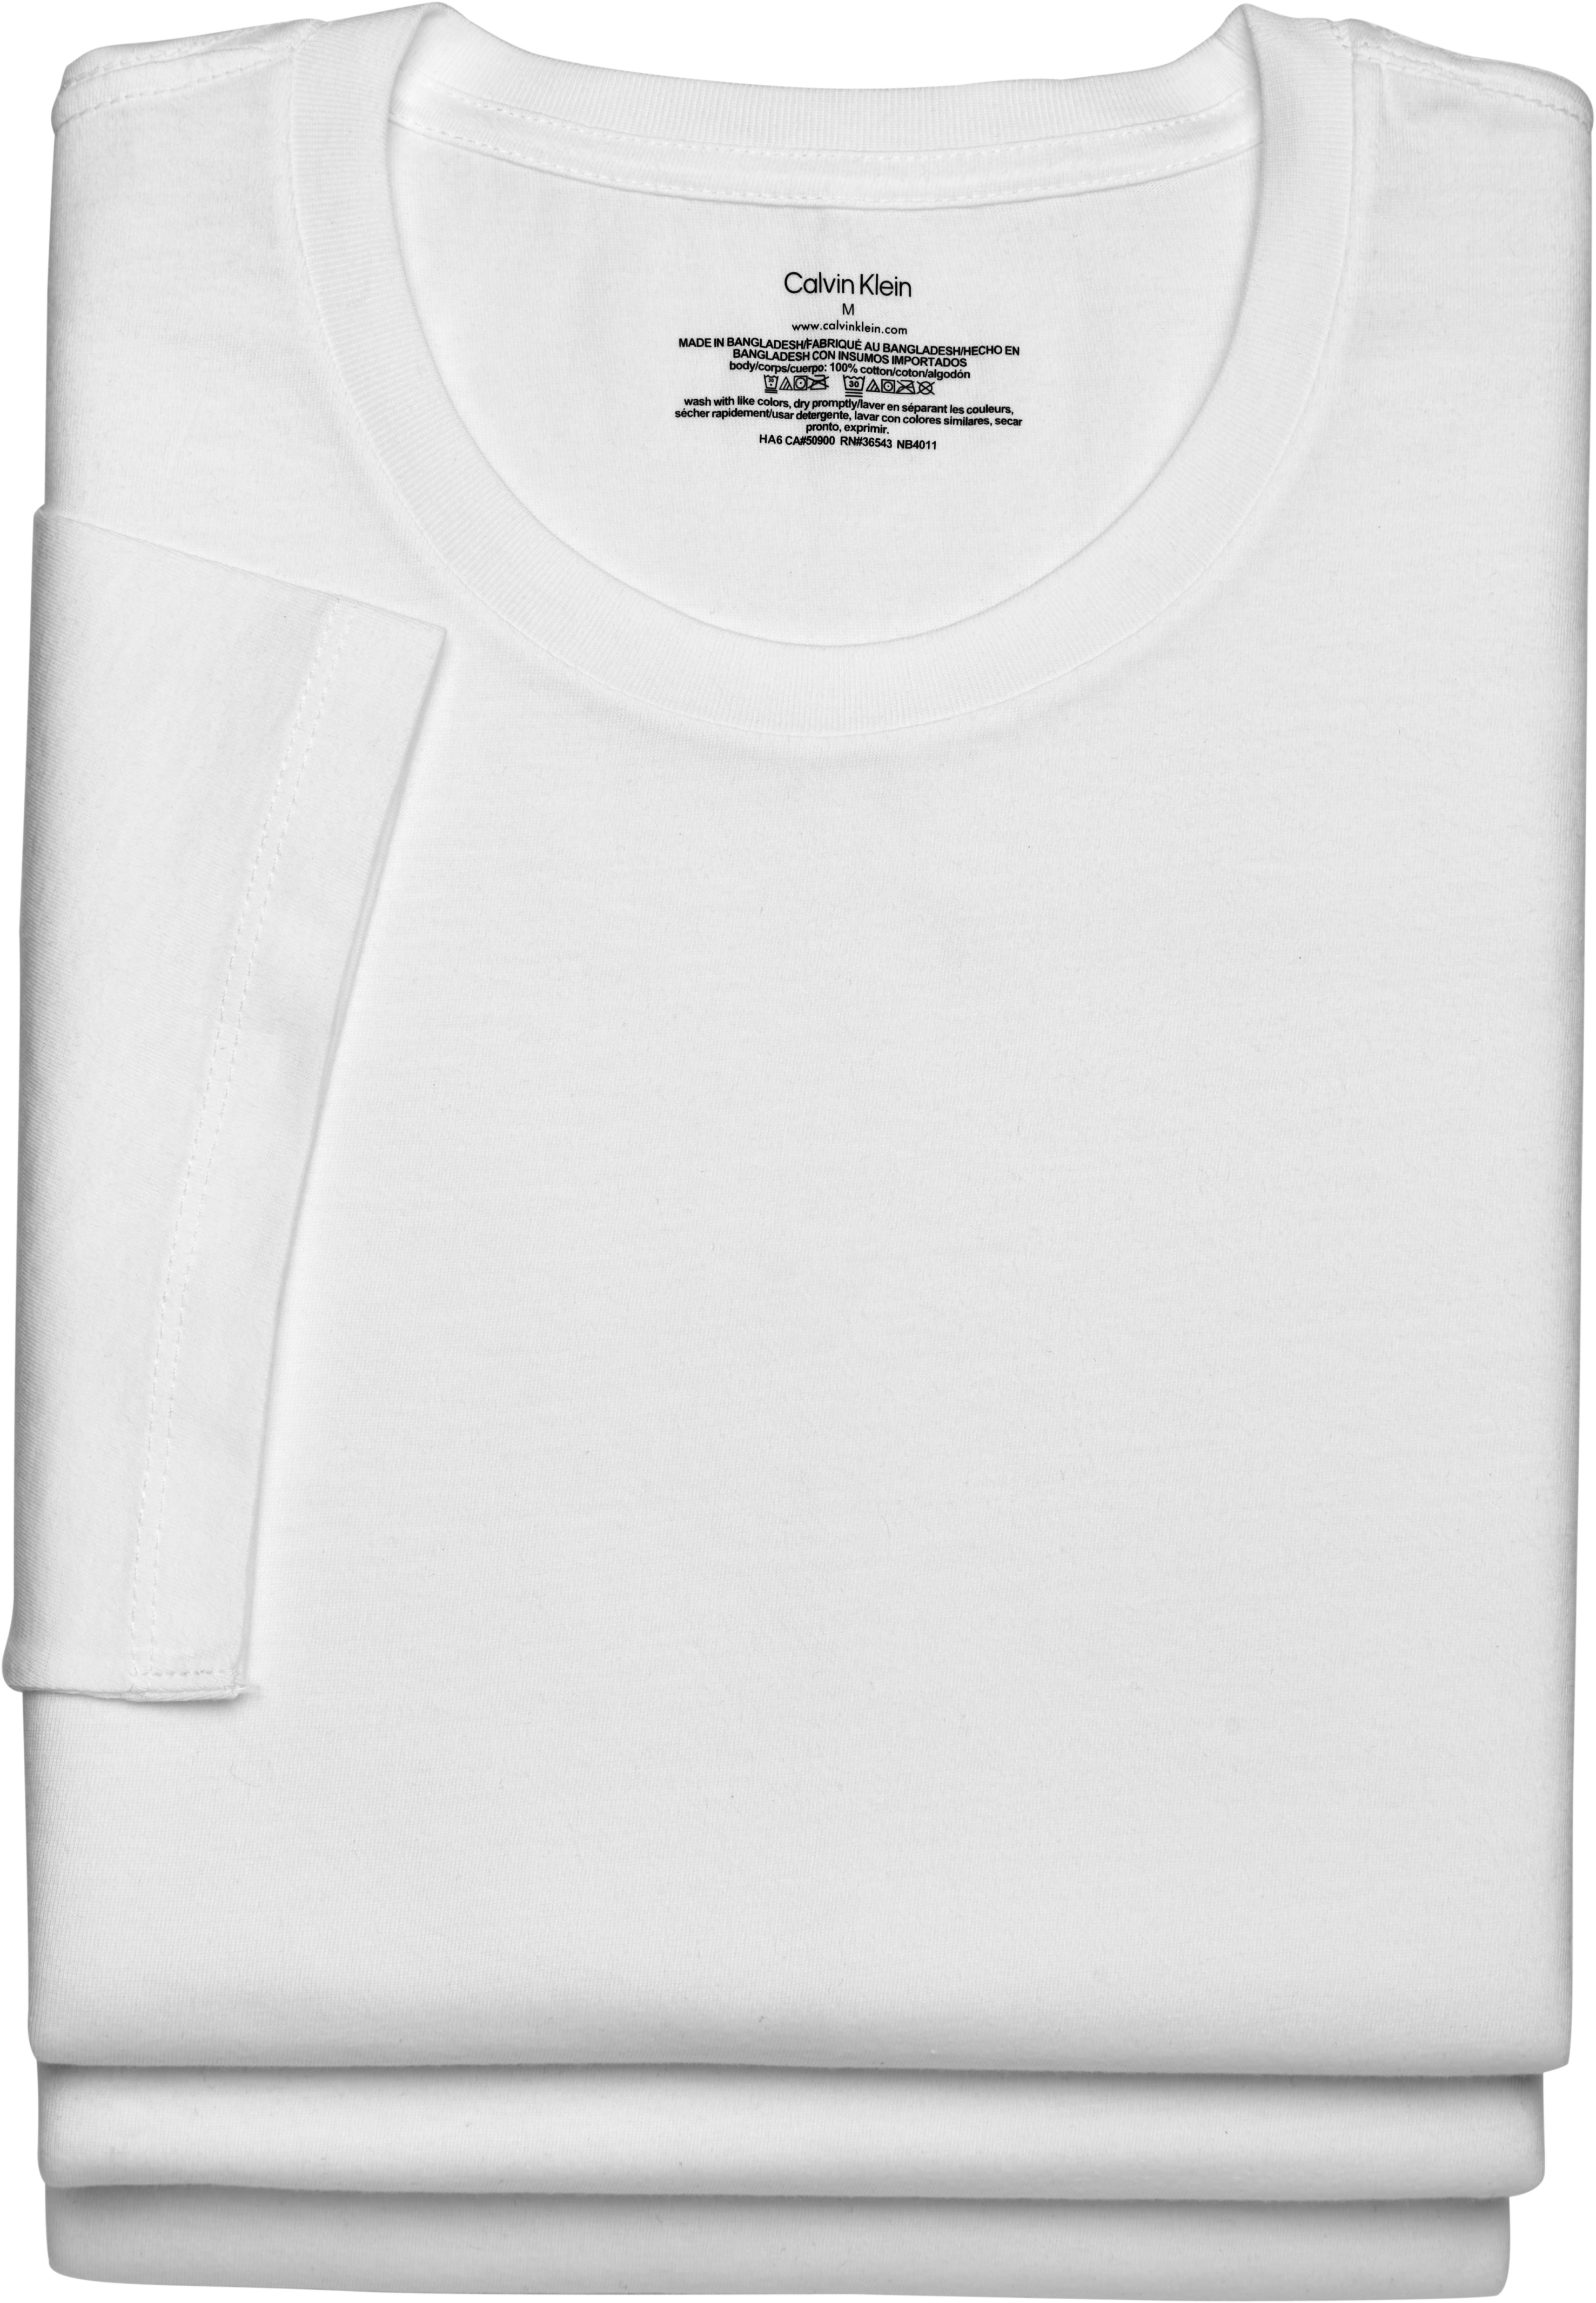 Autonom dollar jury Calvin Klein Crew Neck T-Shirt, 3-Pack, White - Men's Shirts | Men's  Wearhouse